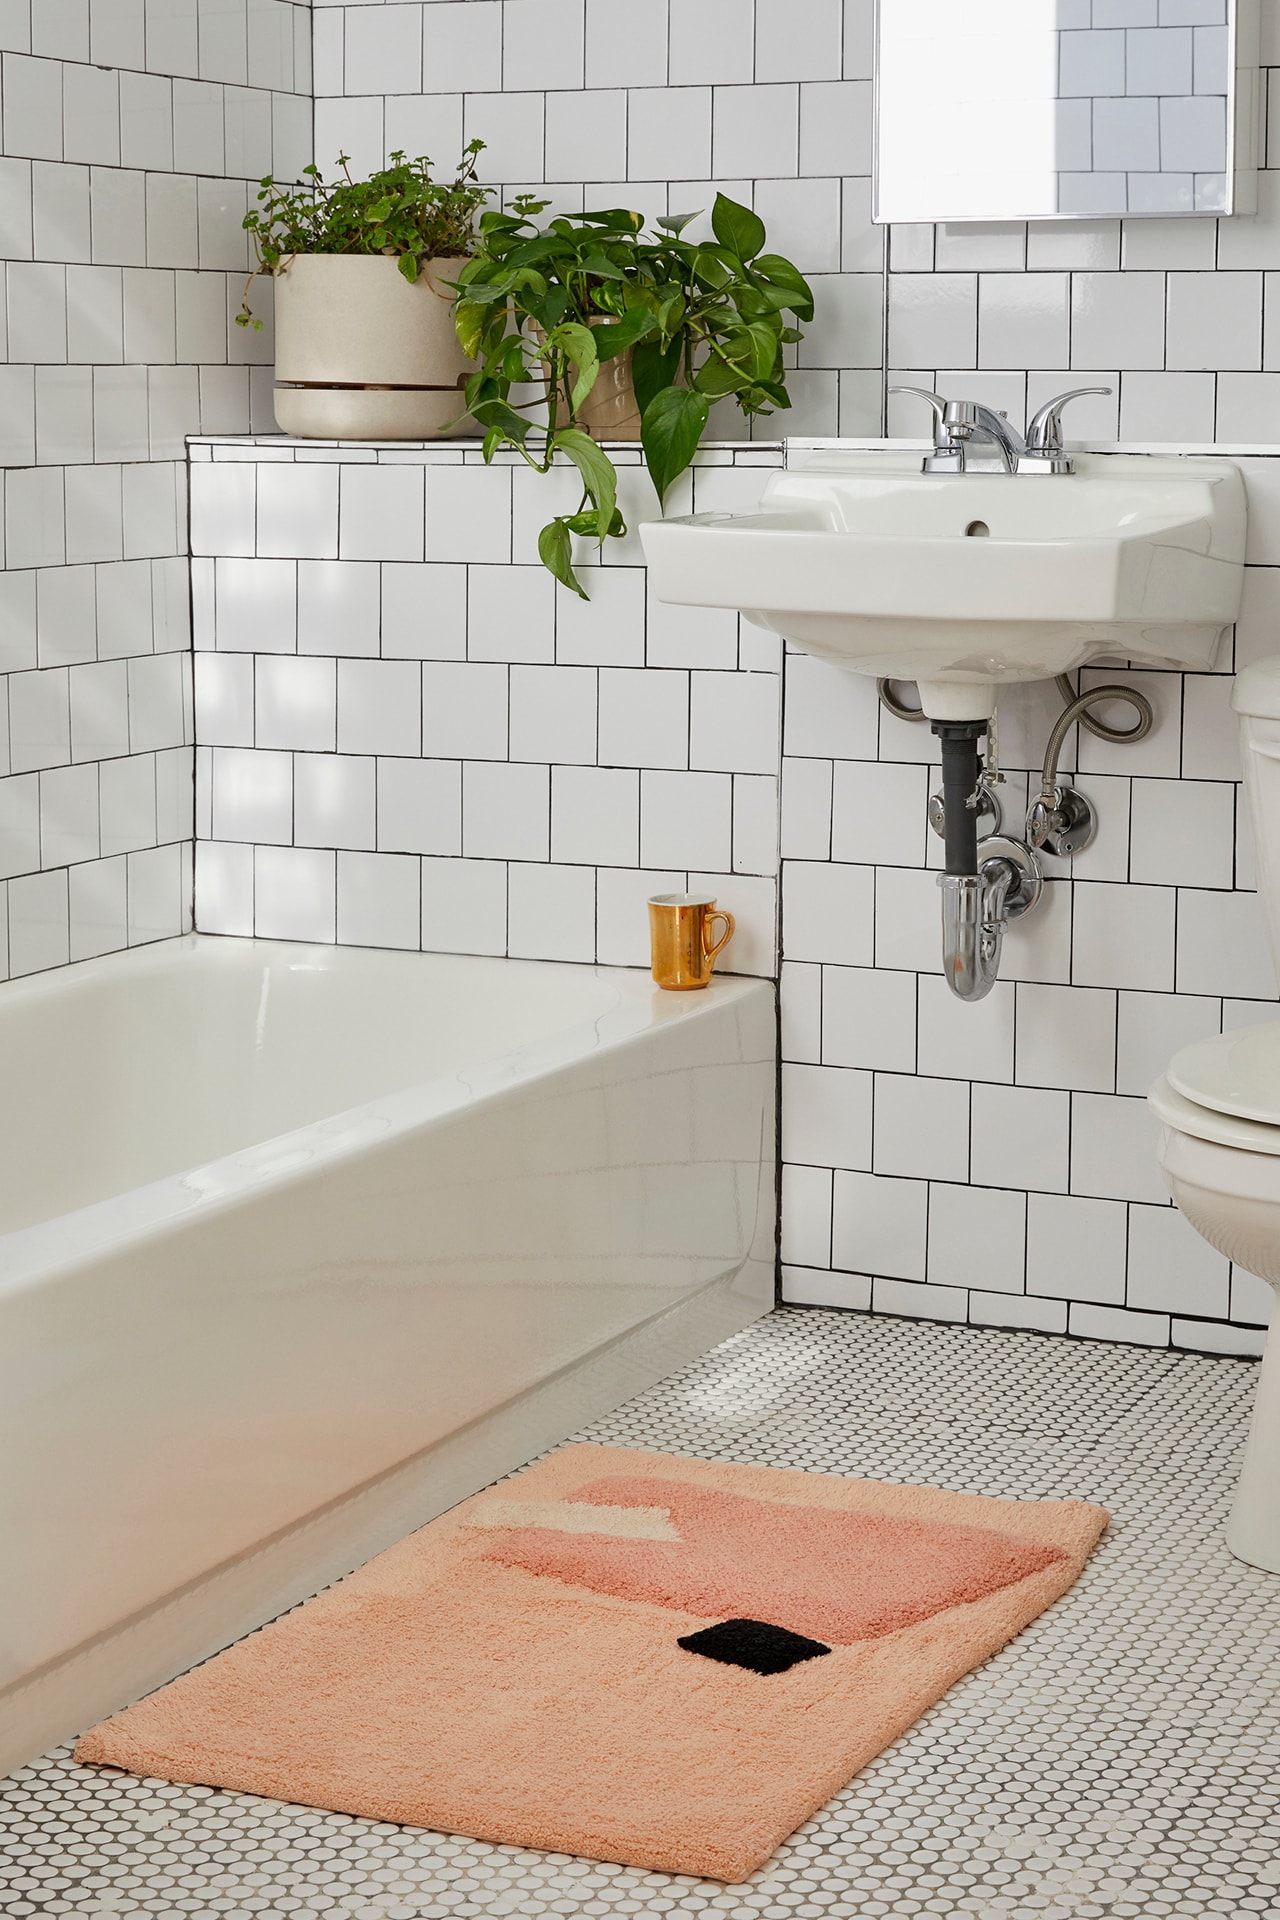 Bathroom rugs - breathtaking design in the bathroom